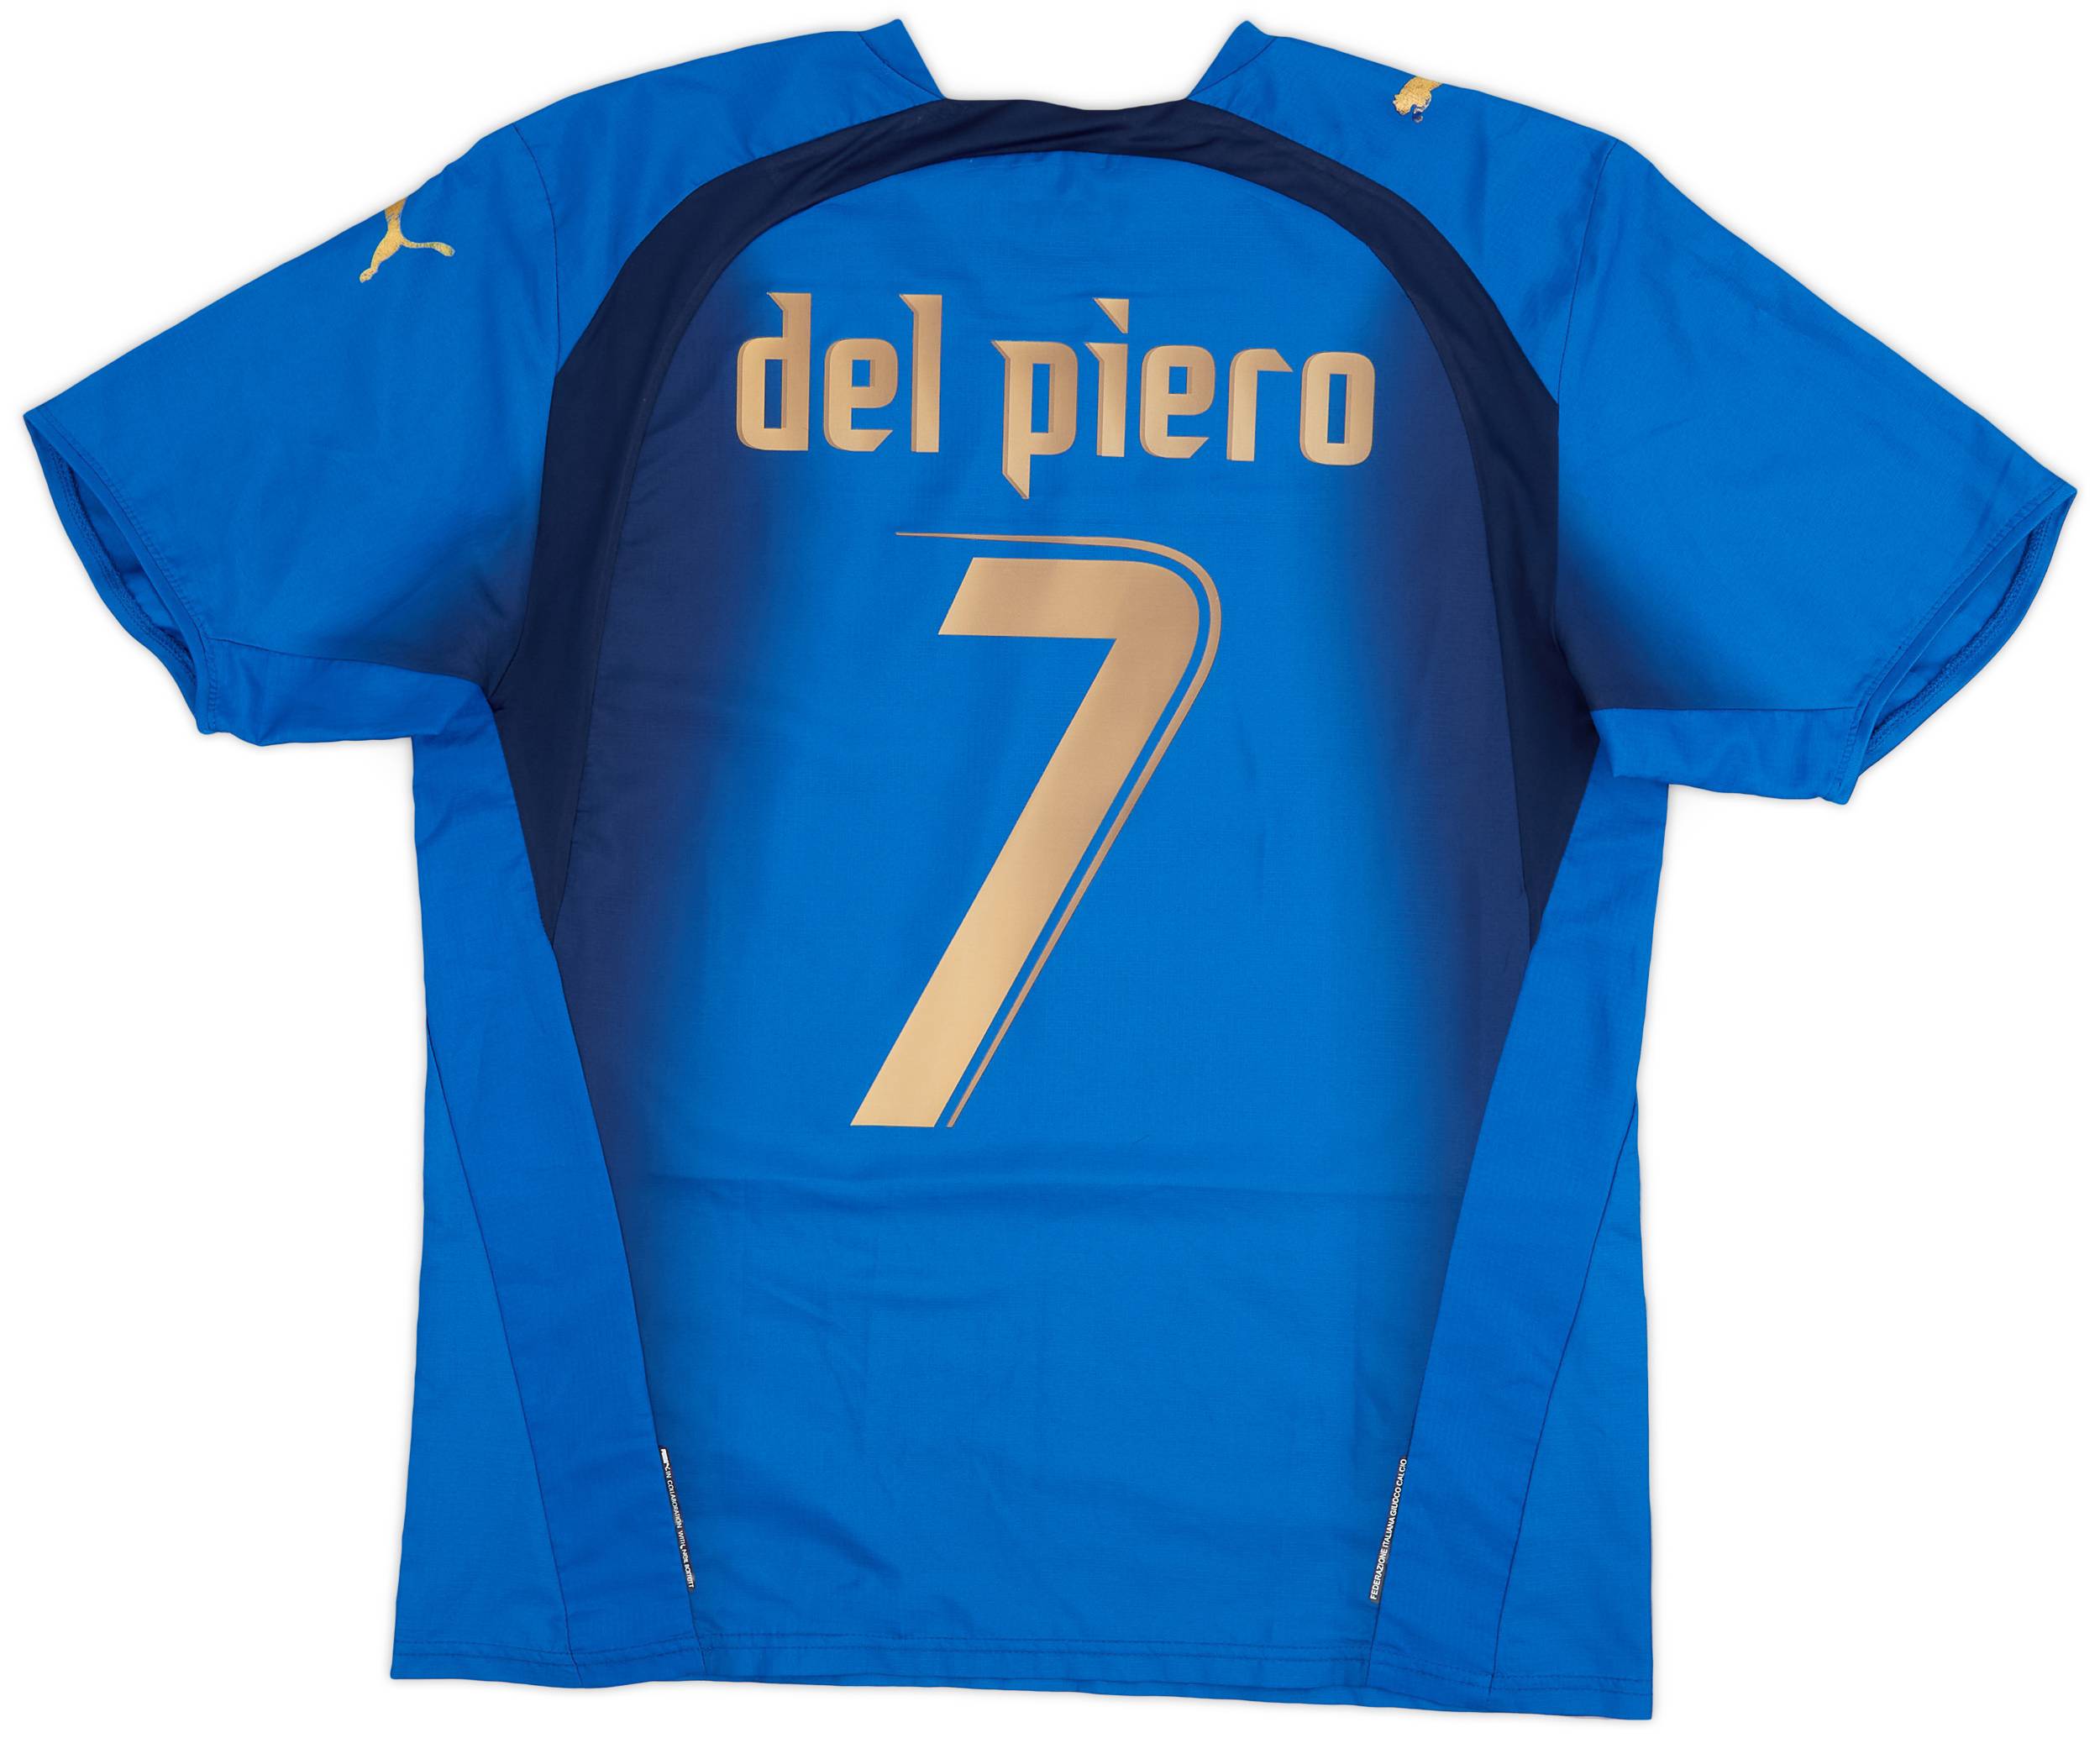 2006 Italy Home Shirt Del Piero #7 - 8/10 - (L)